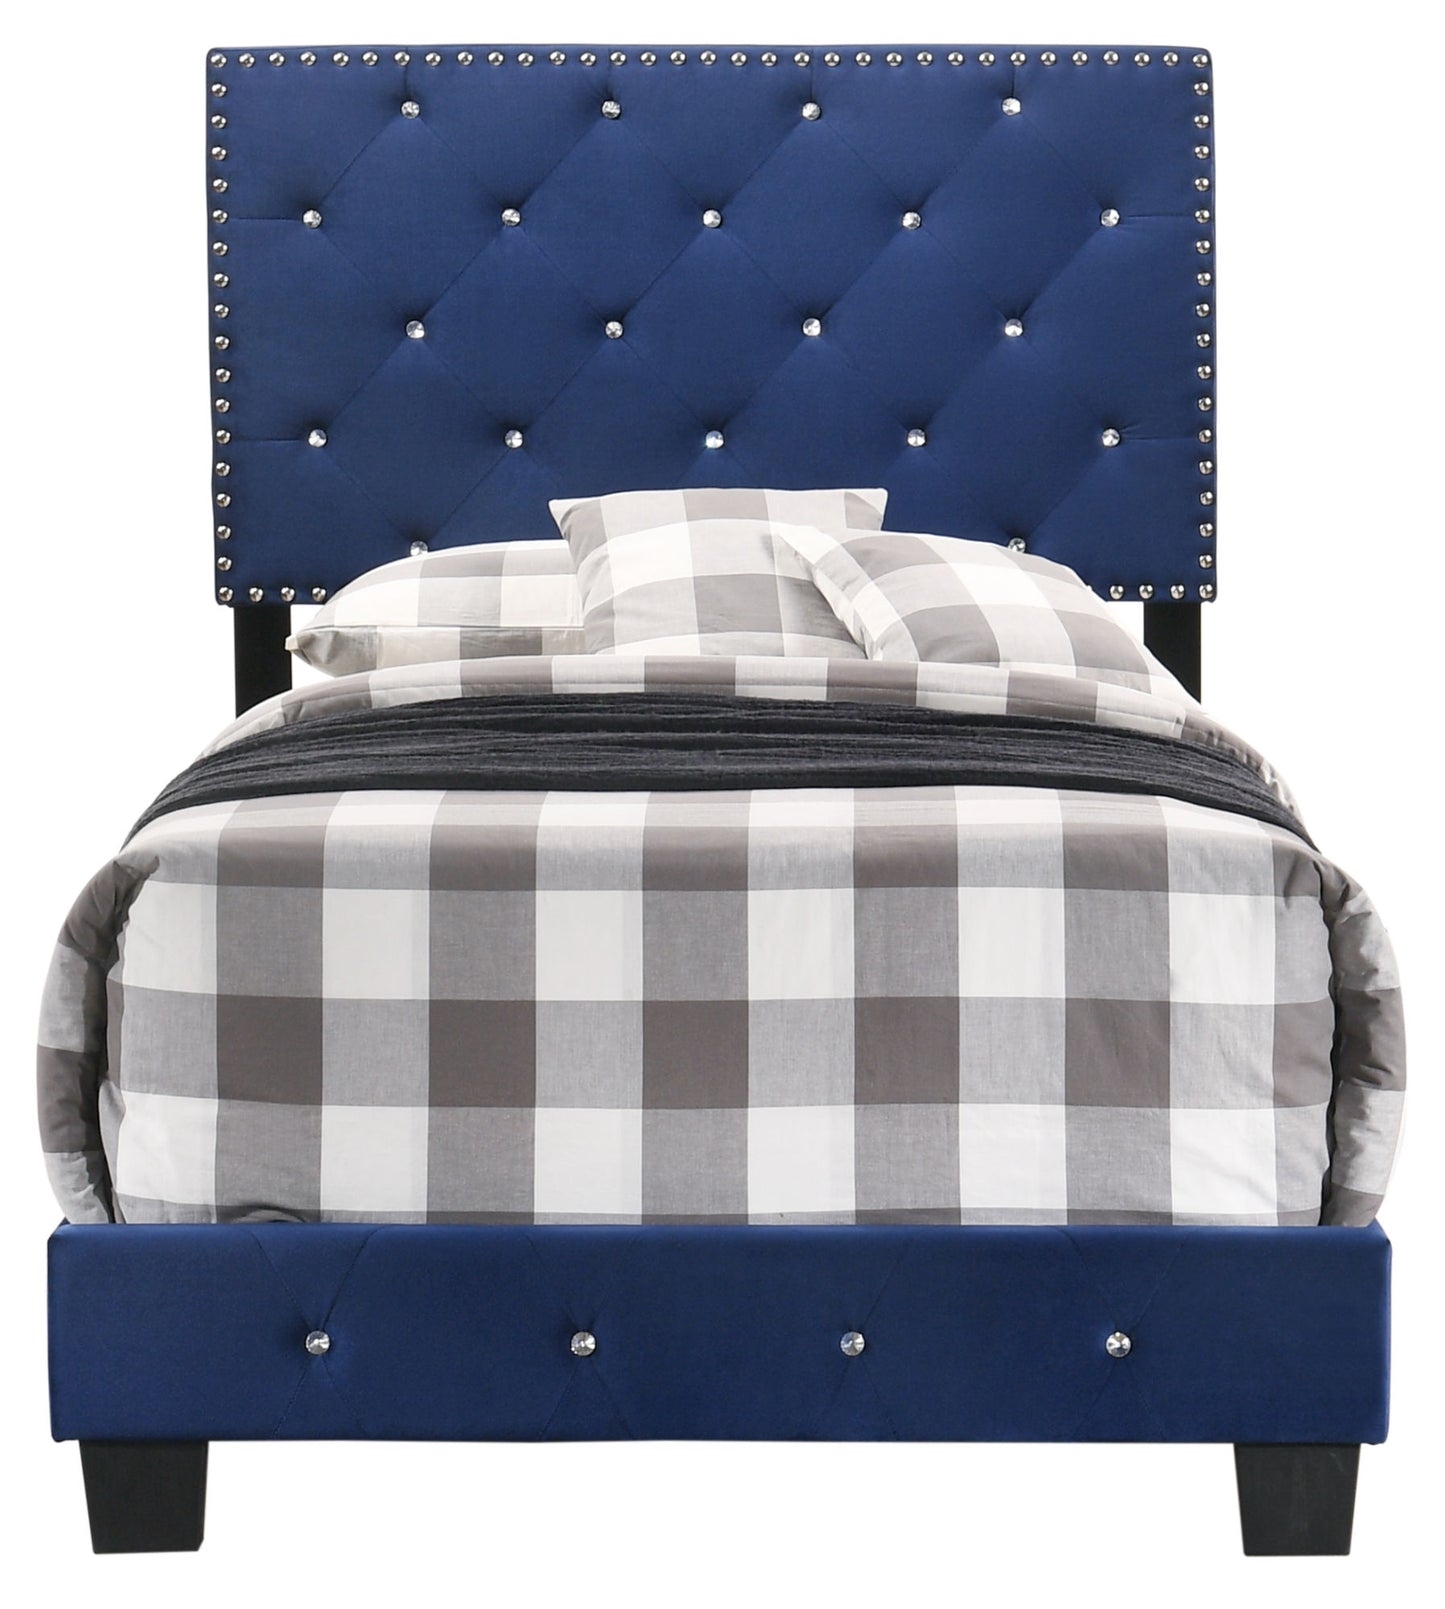 suffolk twin bed, navy blue